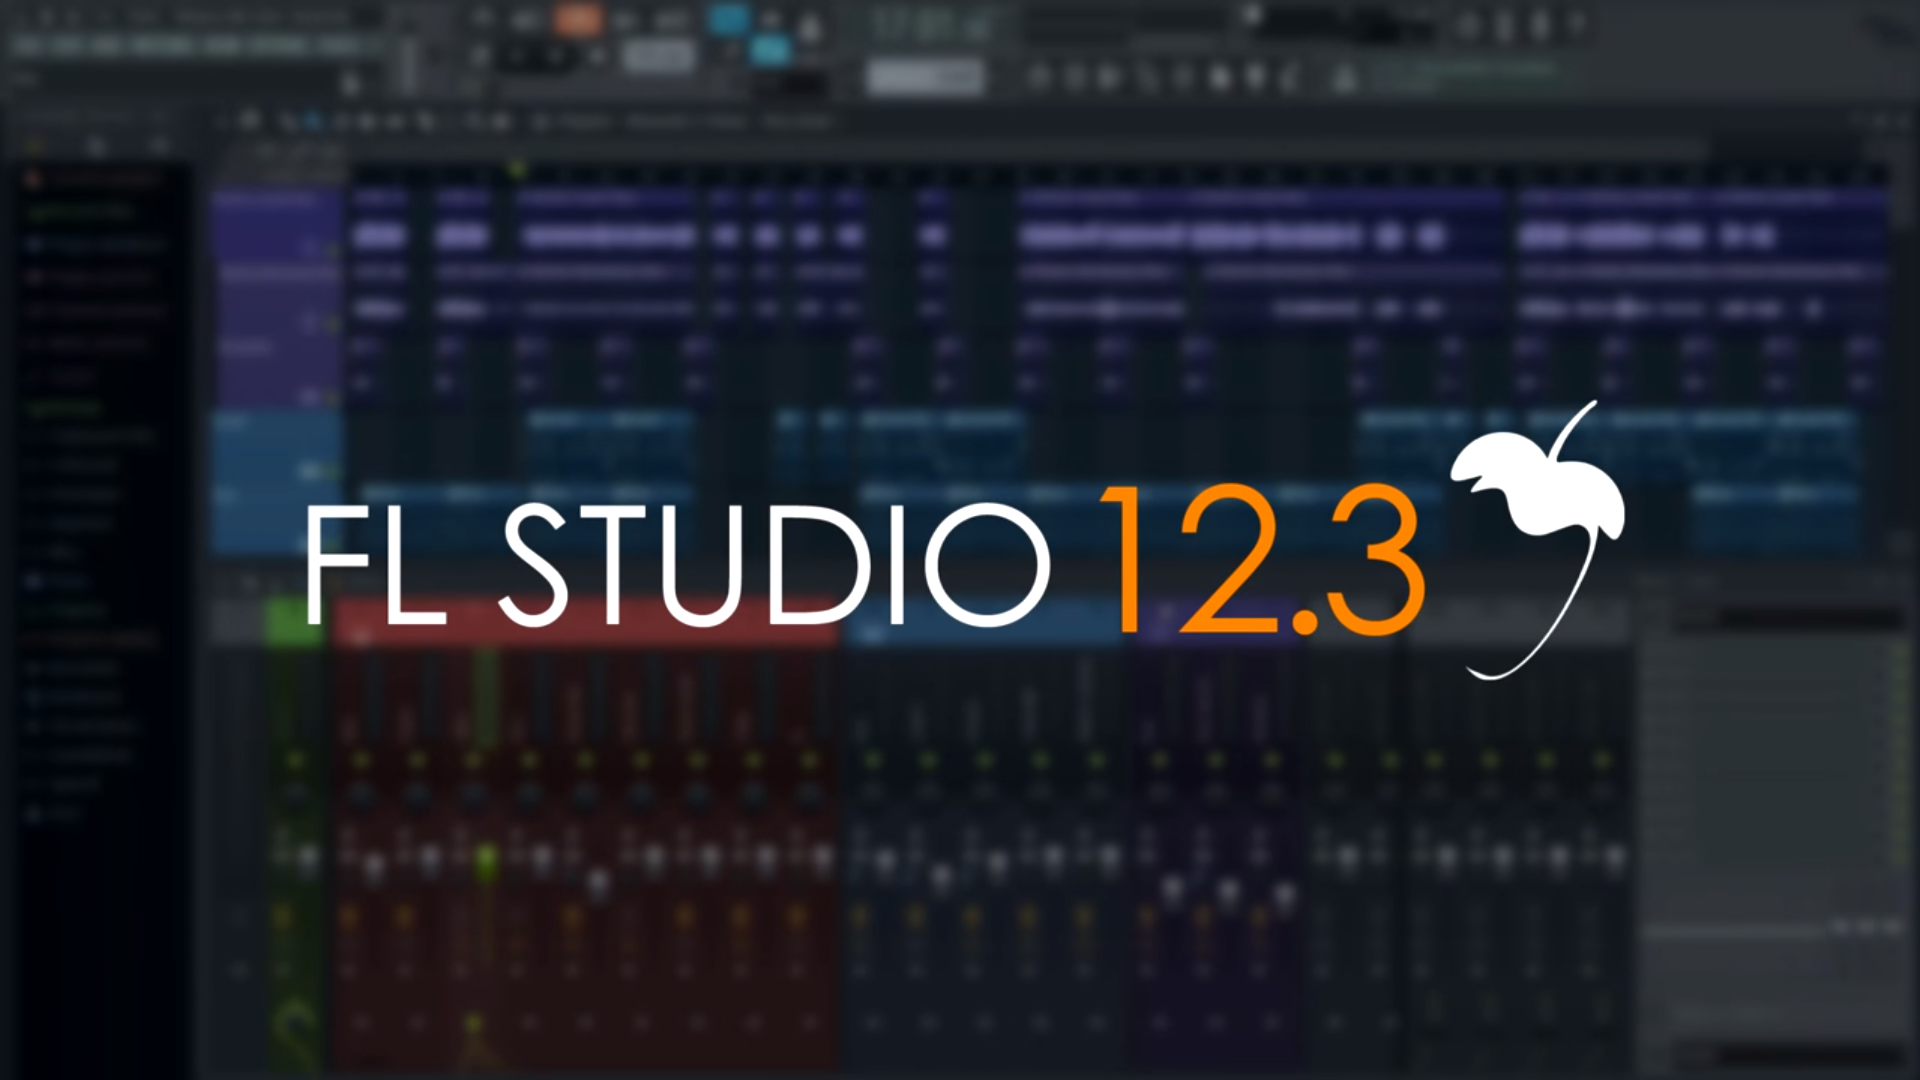 fl studio 21 all plugins